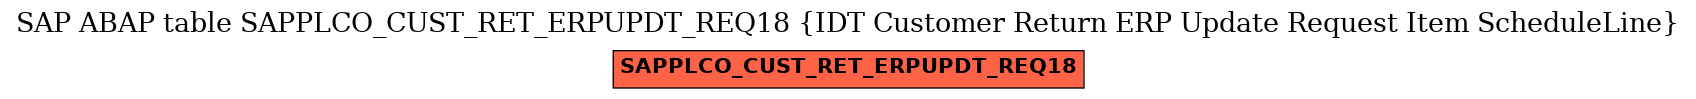 E-R Diagram for table SAPPLCO_CUST_RET_ERPUPDT_REQ18 (IDT Customer Return ERP Update Request Item ScheduleLine)